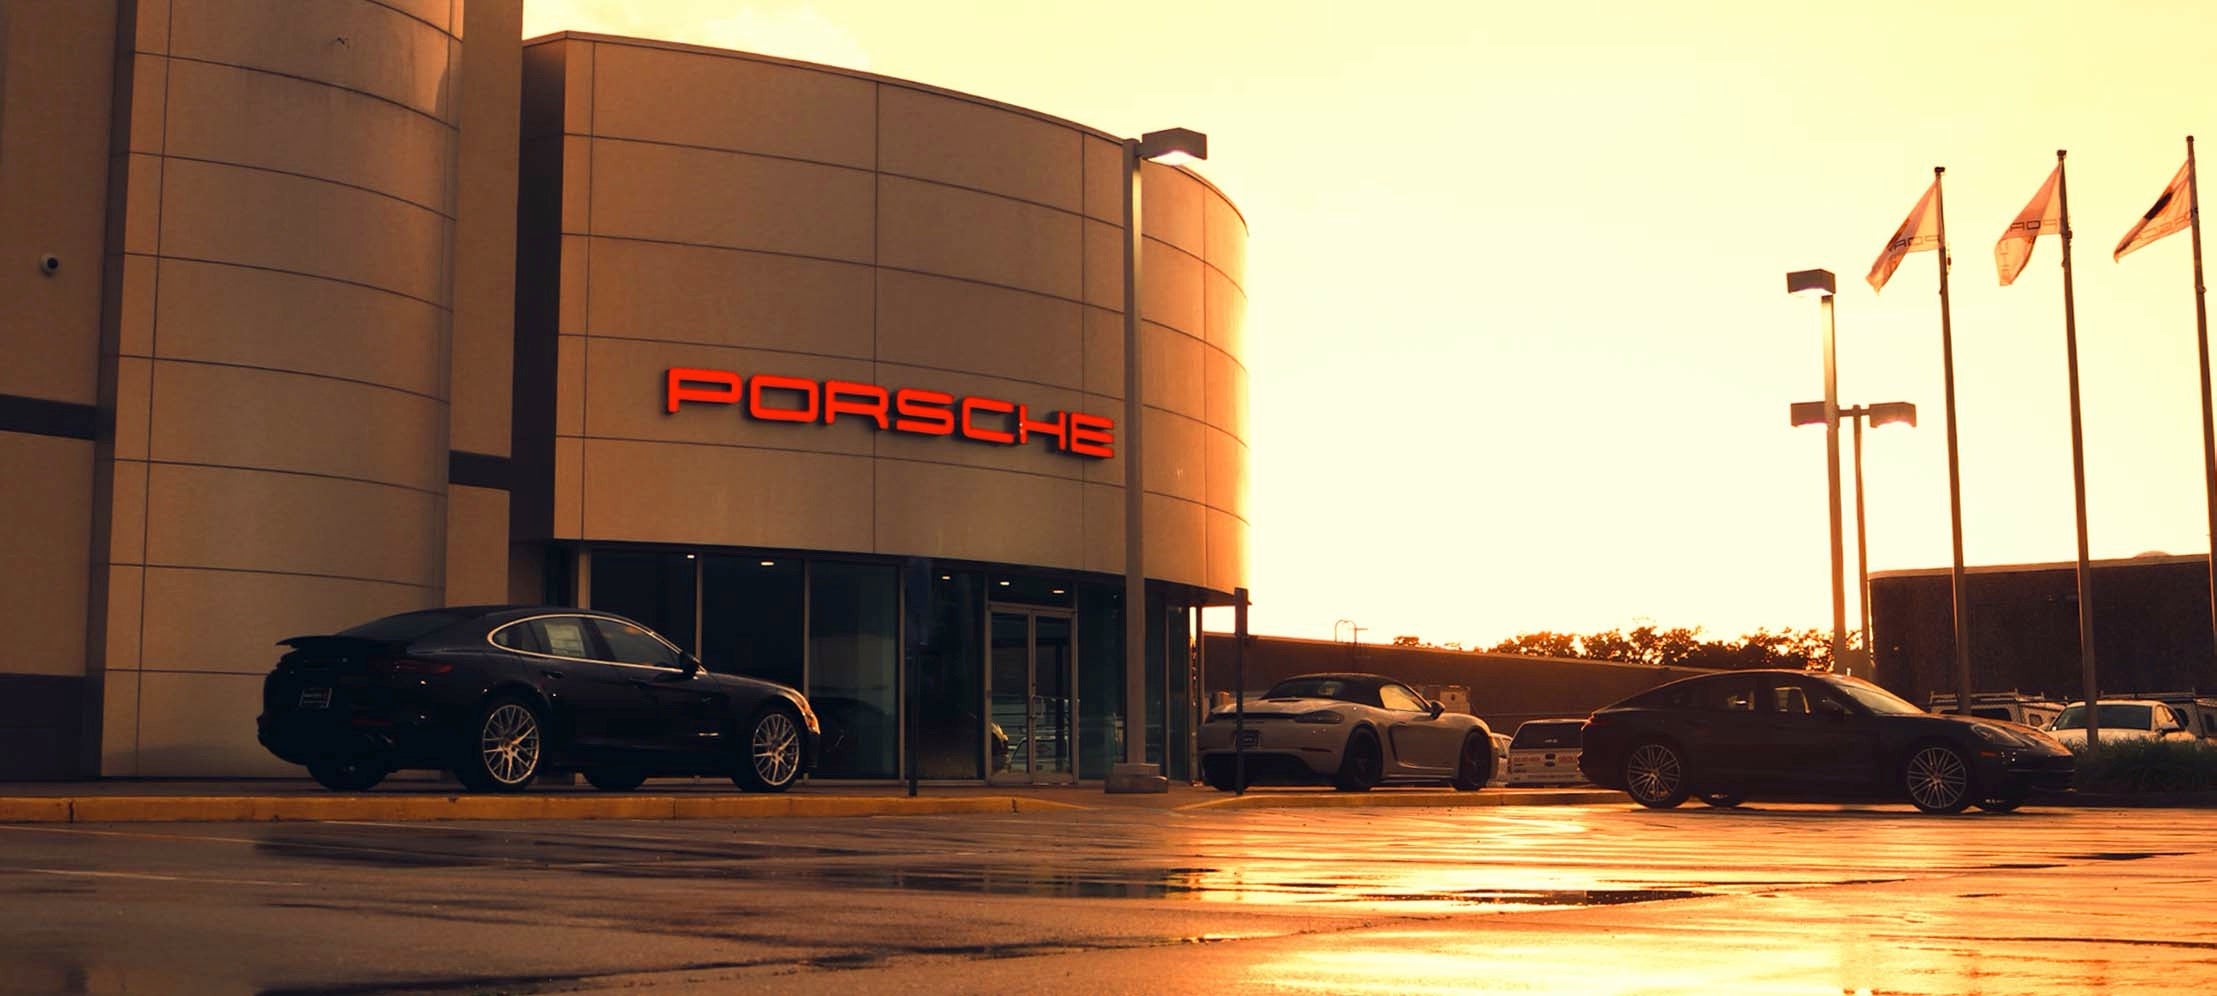 Harris Porsche Store Front